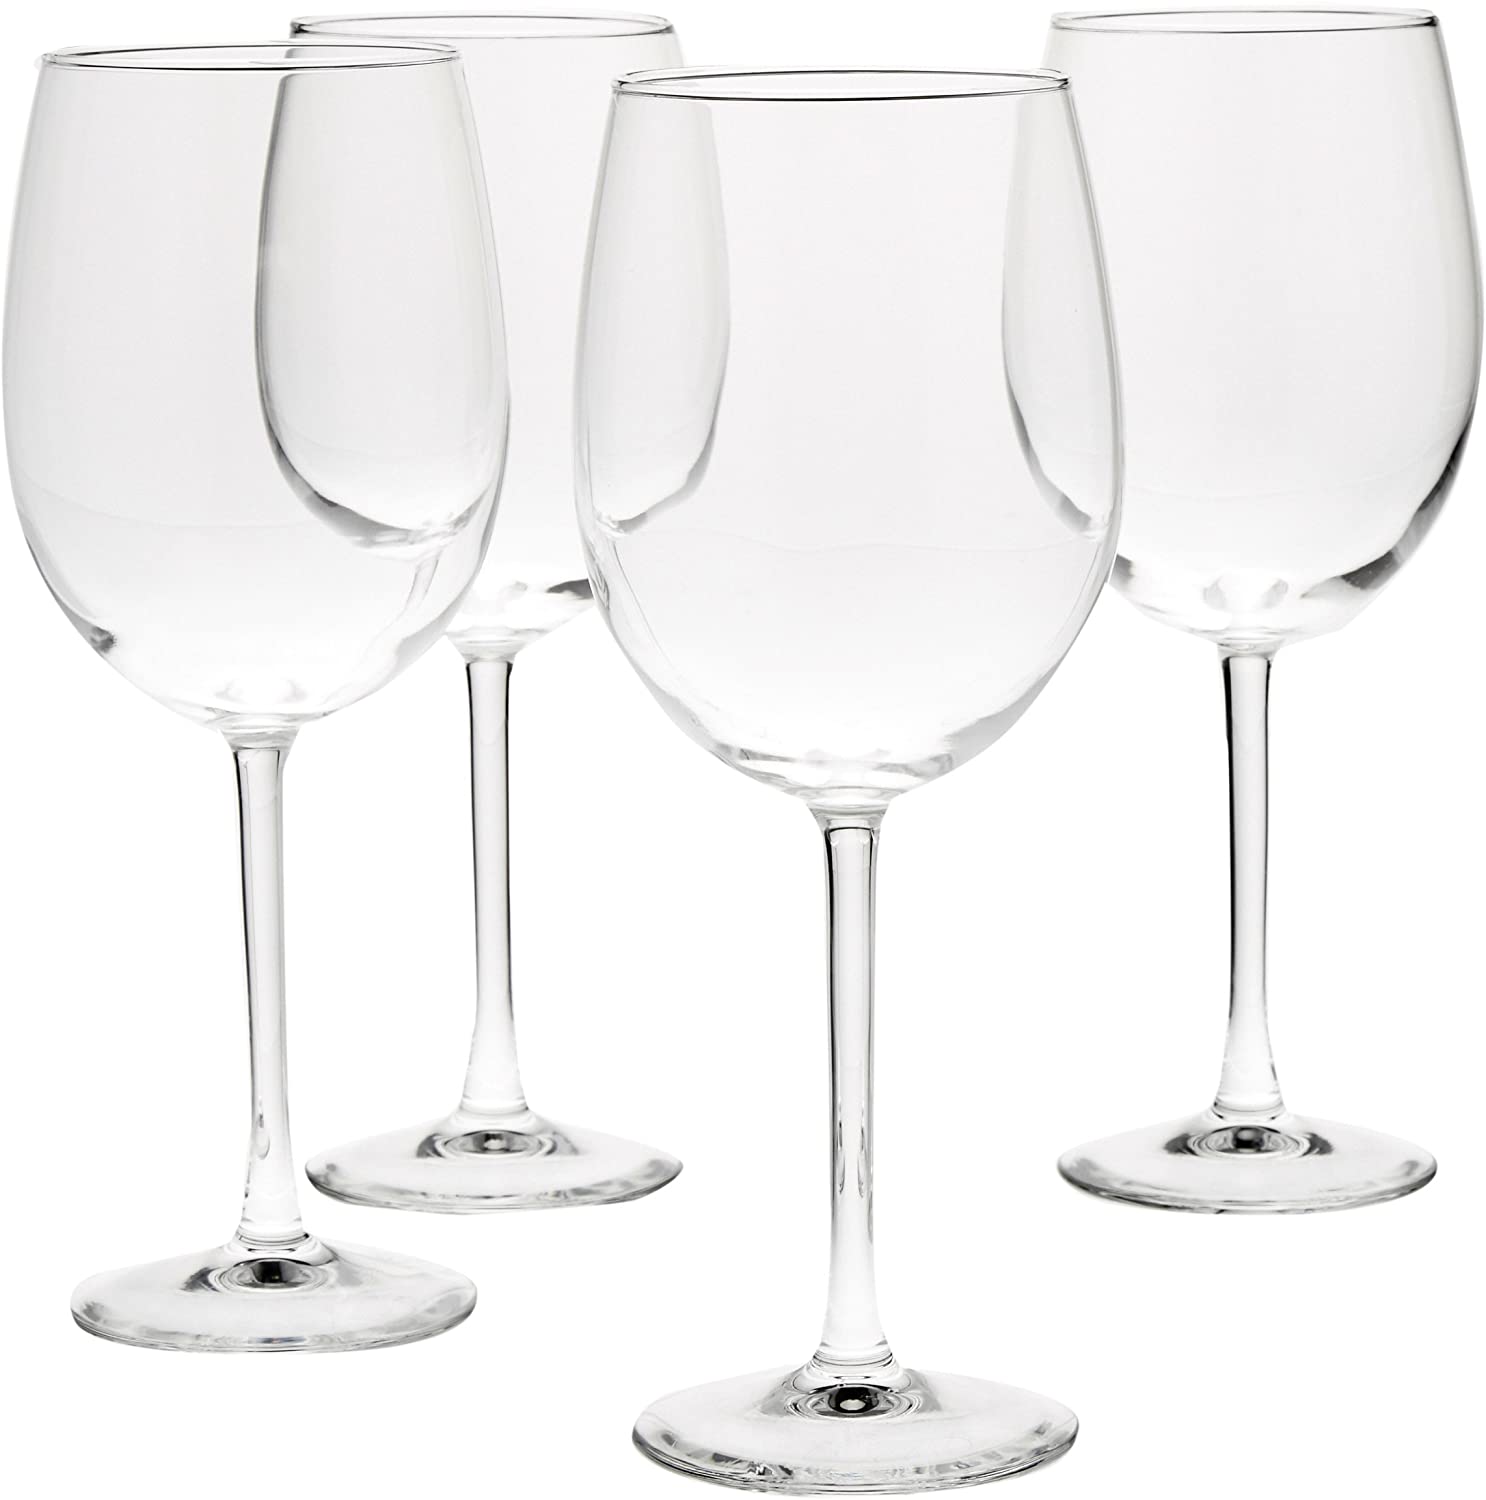 AmazonBasics All-Purpose Wine Glasses, 19-Ounce, Set of 4